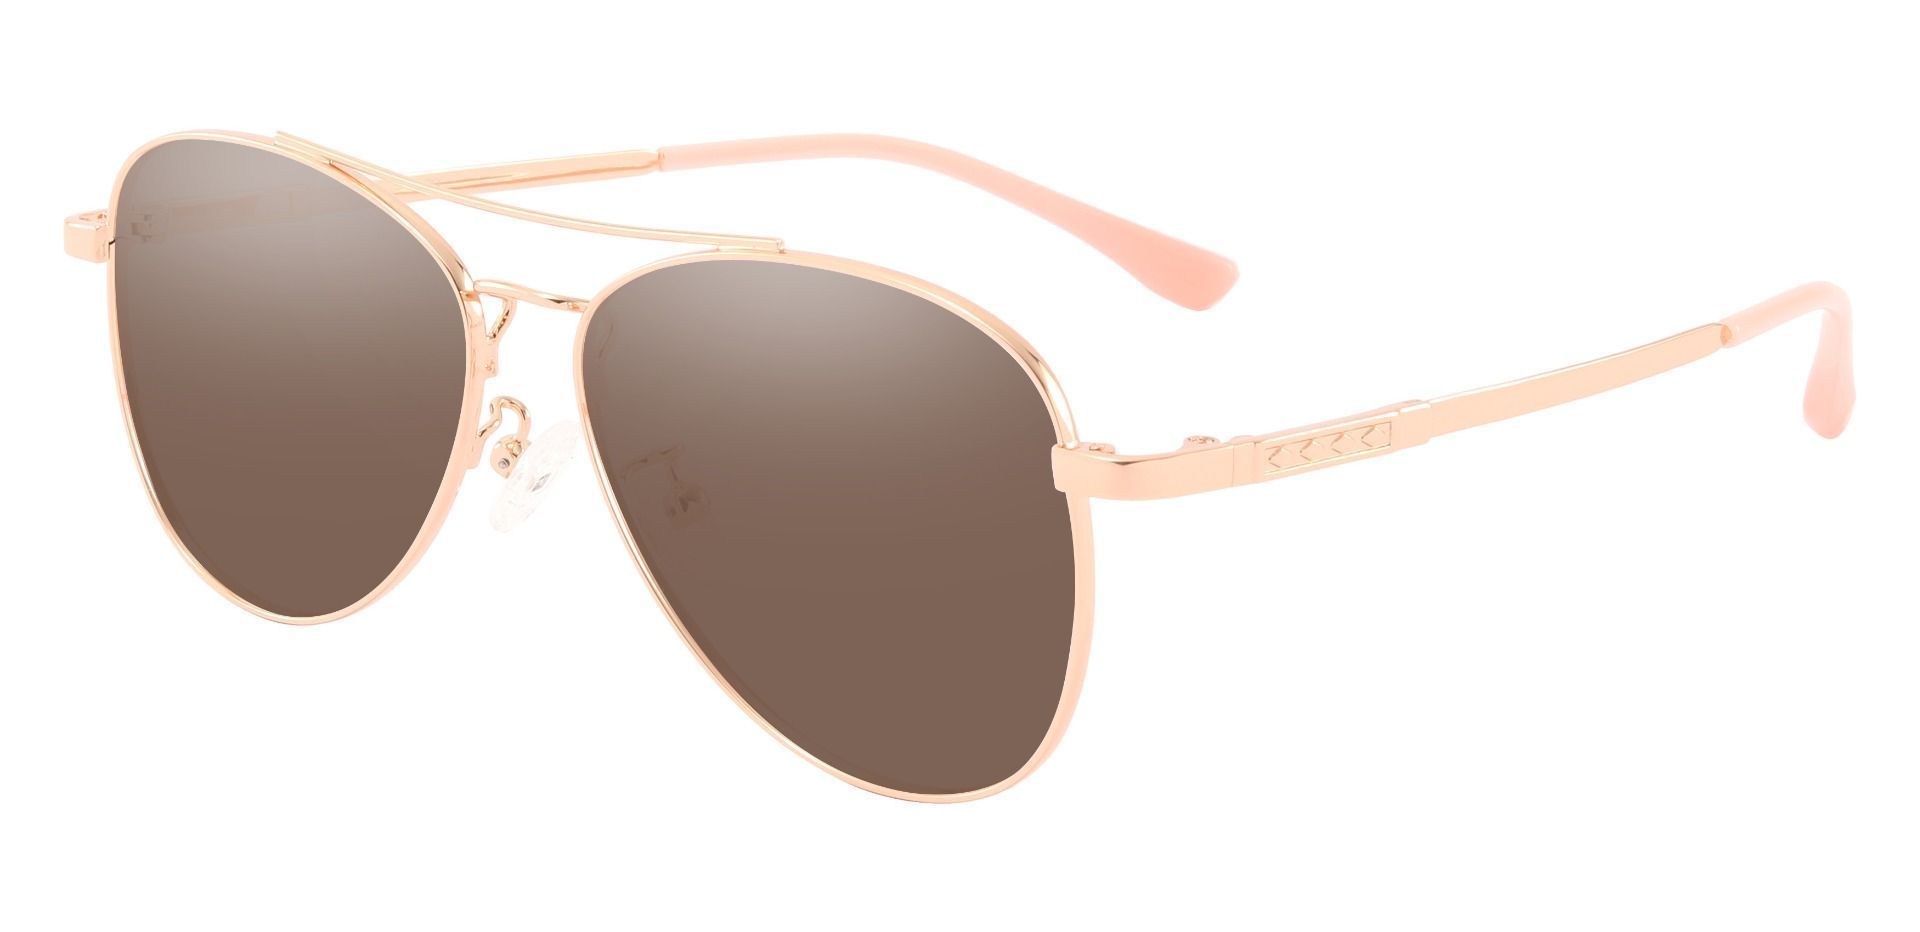 Sterling Aviator Prescription Sunglasses - Rose Gold Frame With Brown Lenses